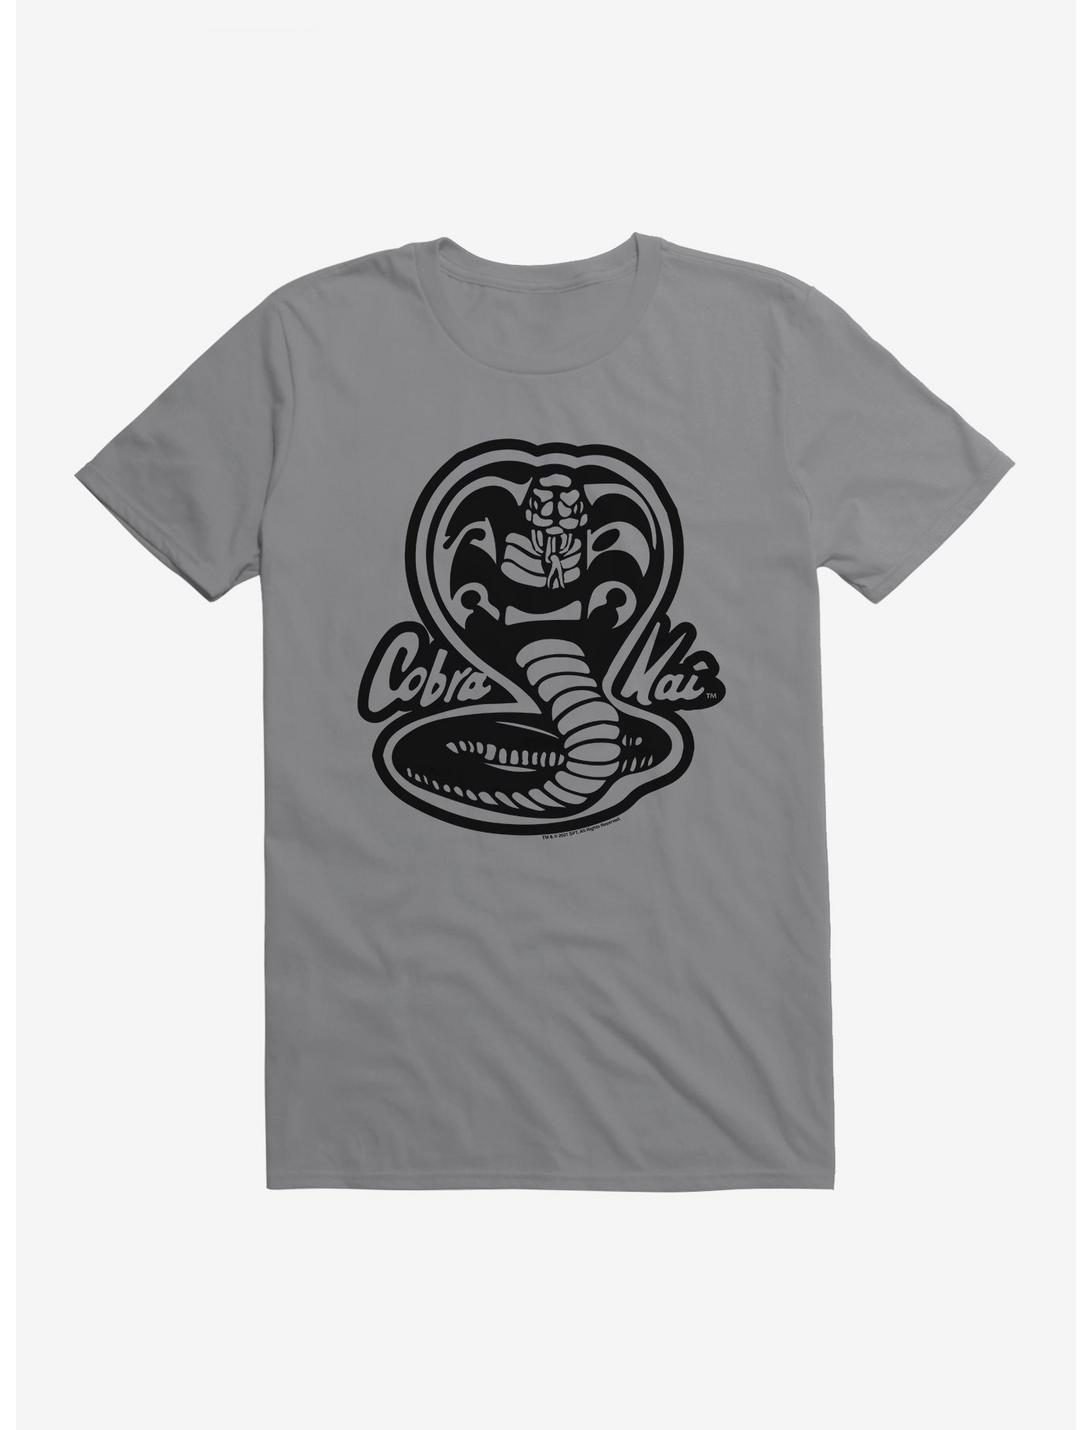 Cobra Kai Black And White Logo T-Shirt, STORM GREY, hi-res